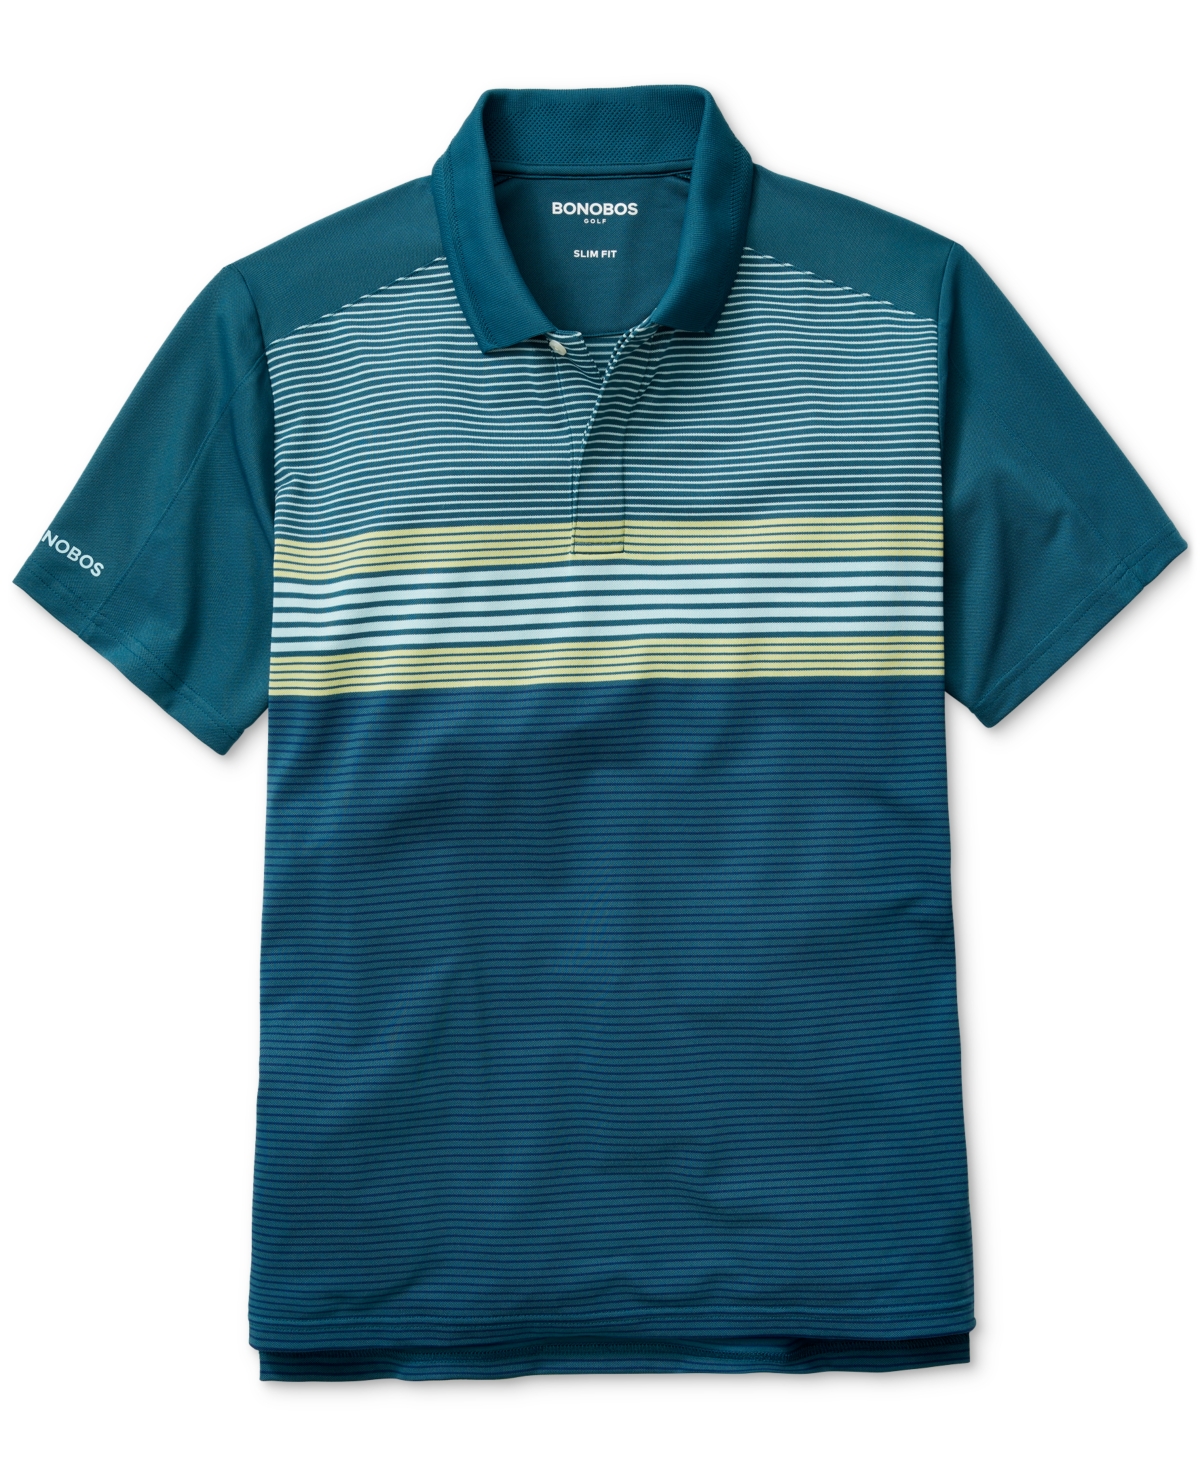 Men's Short Sleeve Colorblocked Pique Tour Polo Shirt - Variated G